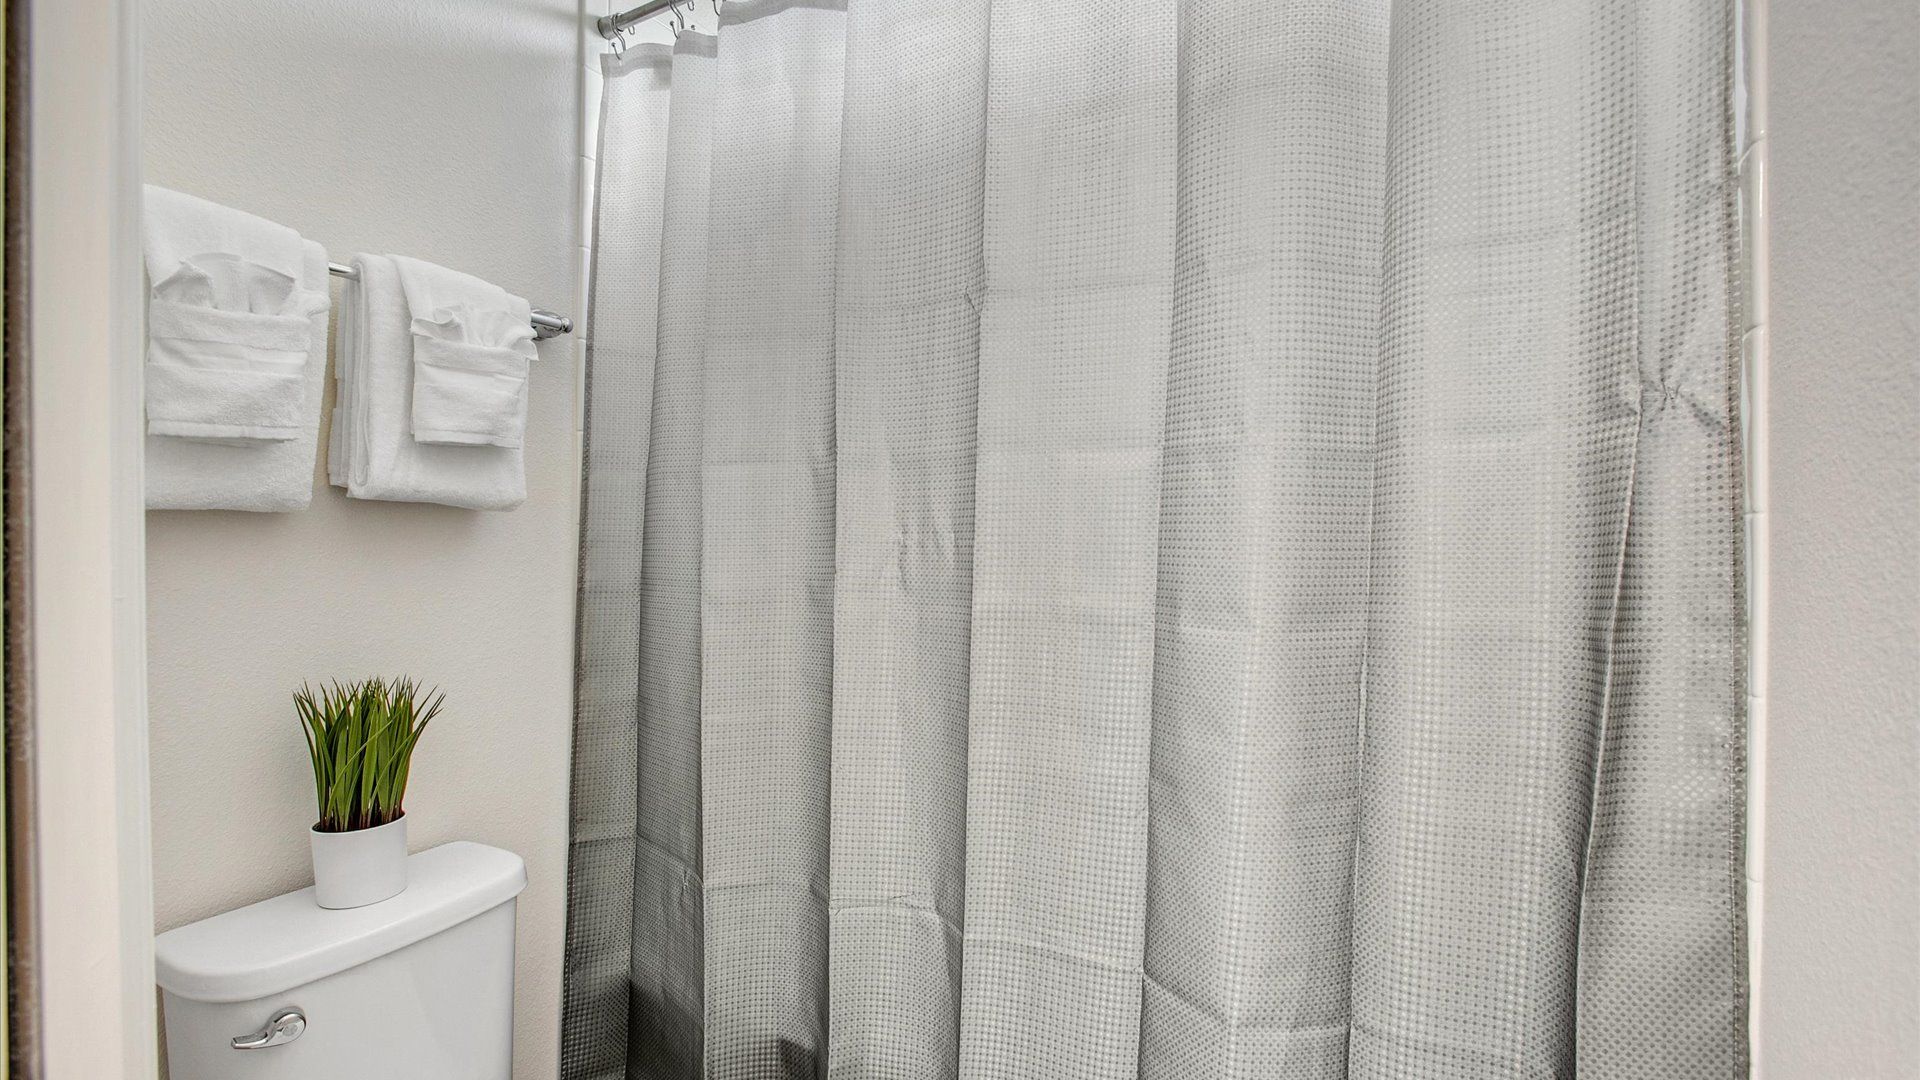 Jack N JIll Bathroom 2 (Angle)
Tub/Shower Combo